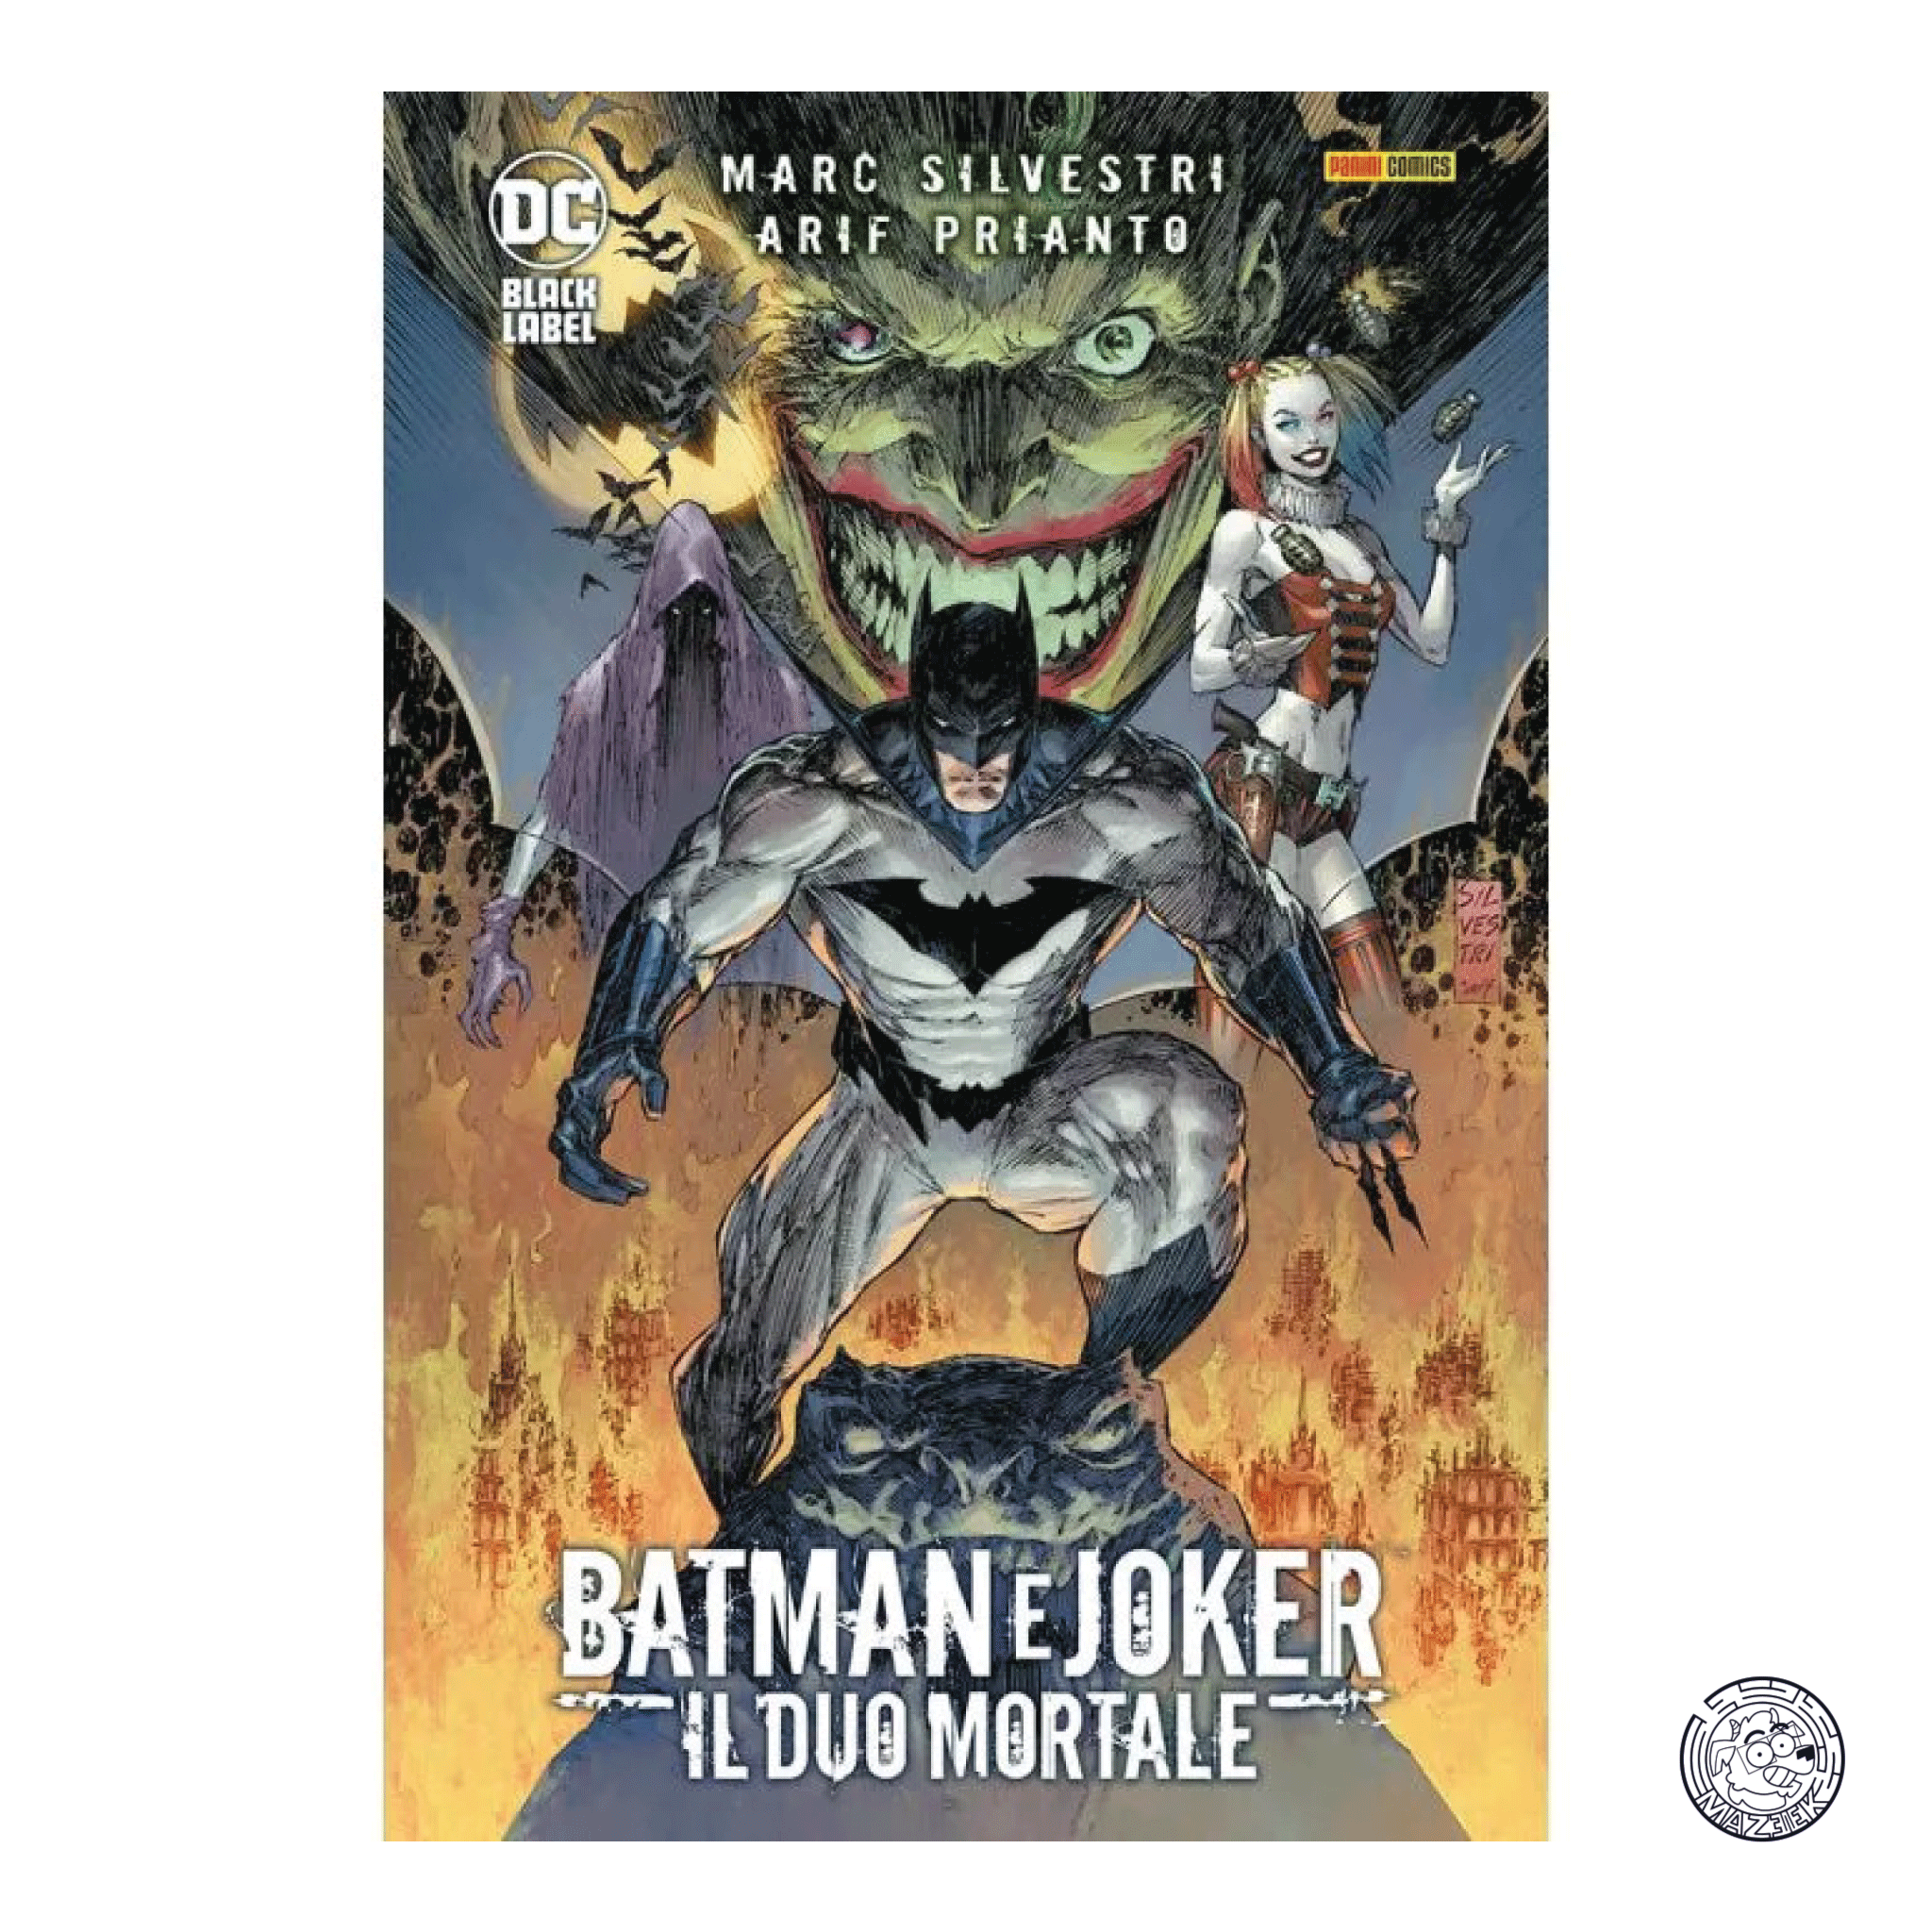 Batman and Joker – The Deadly Duo